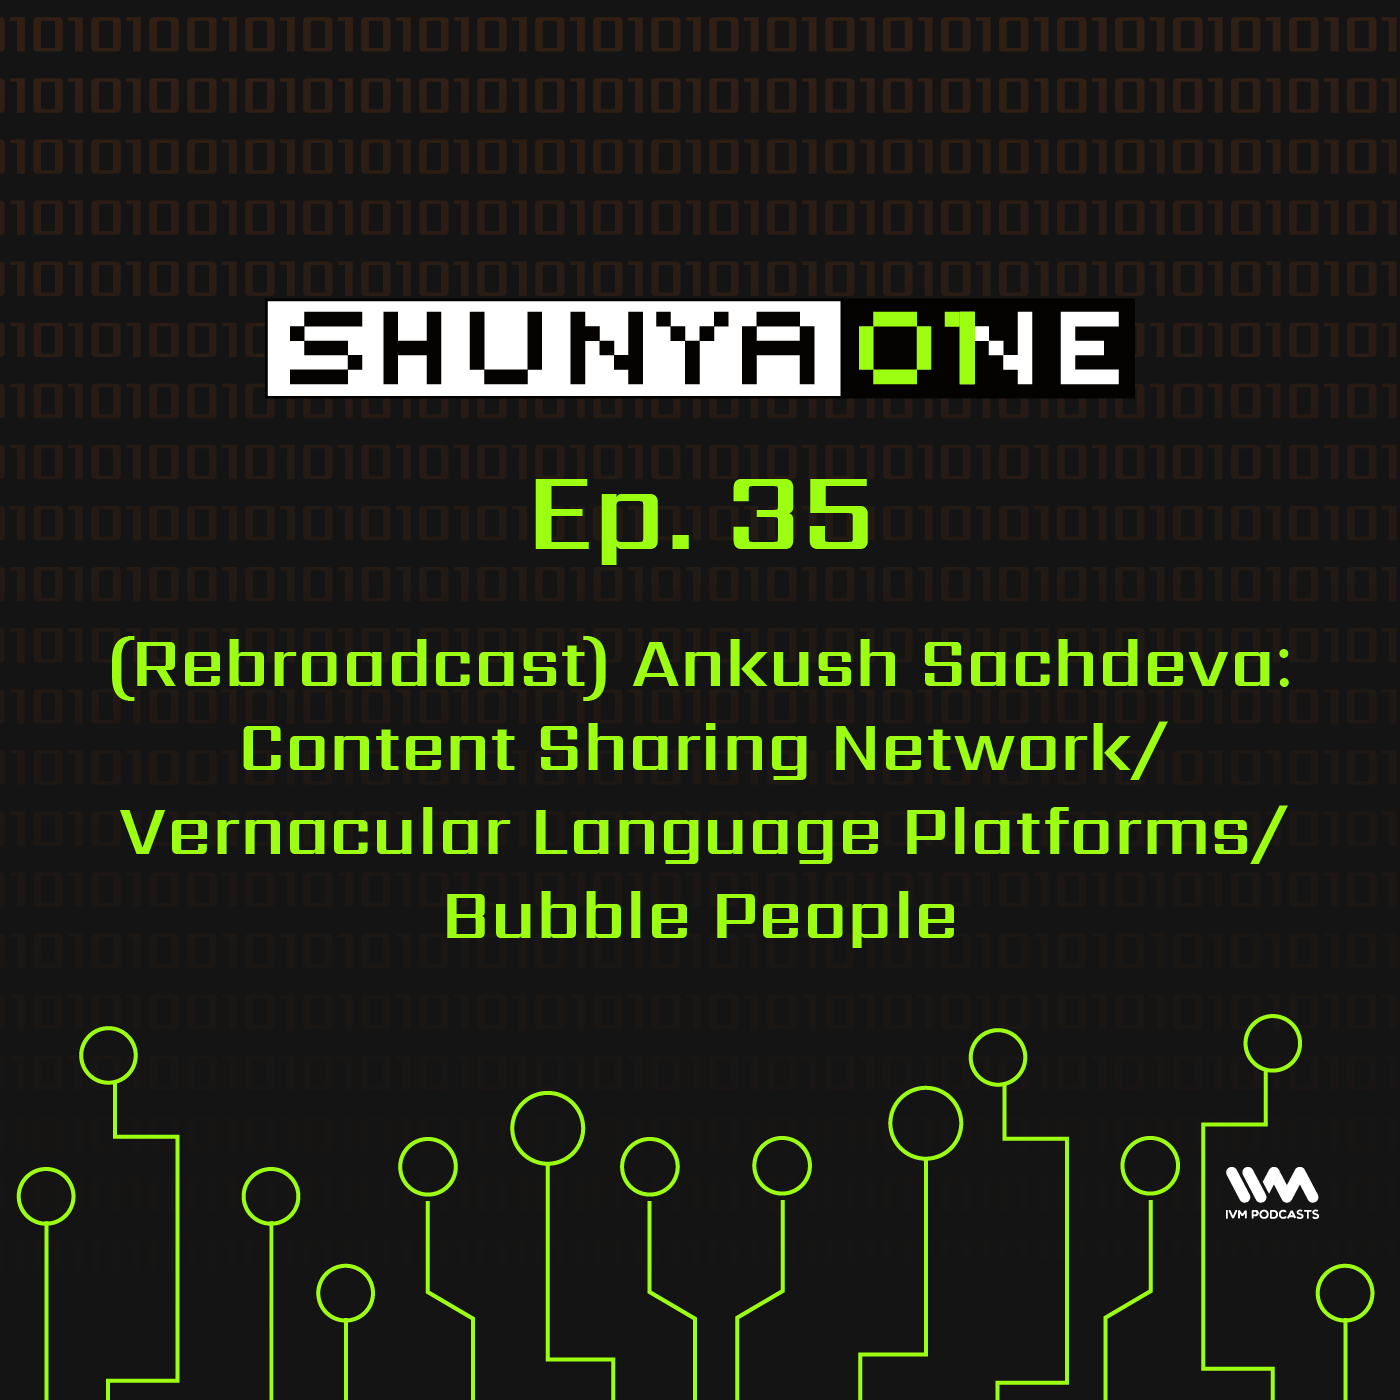 (Rebroadcast) Ankush Sachdeva: Content Sharing Network / Vernacular Language Platforms / Bubble People